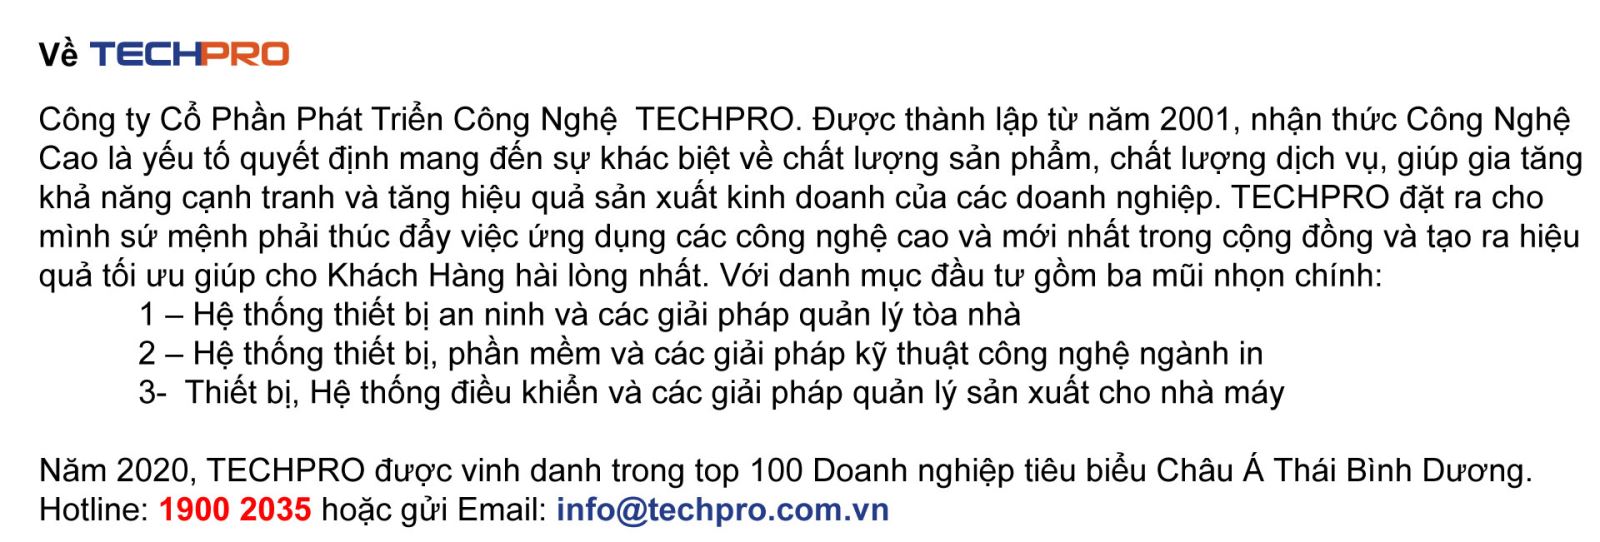 Giới thiệu về TECHPRO